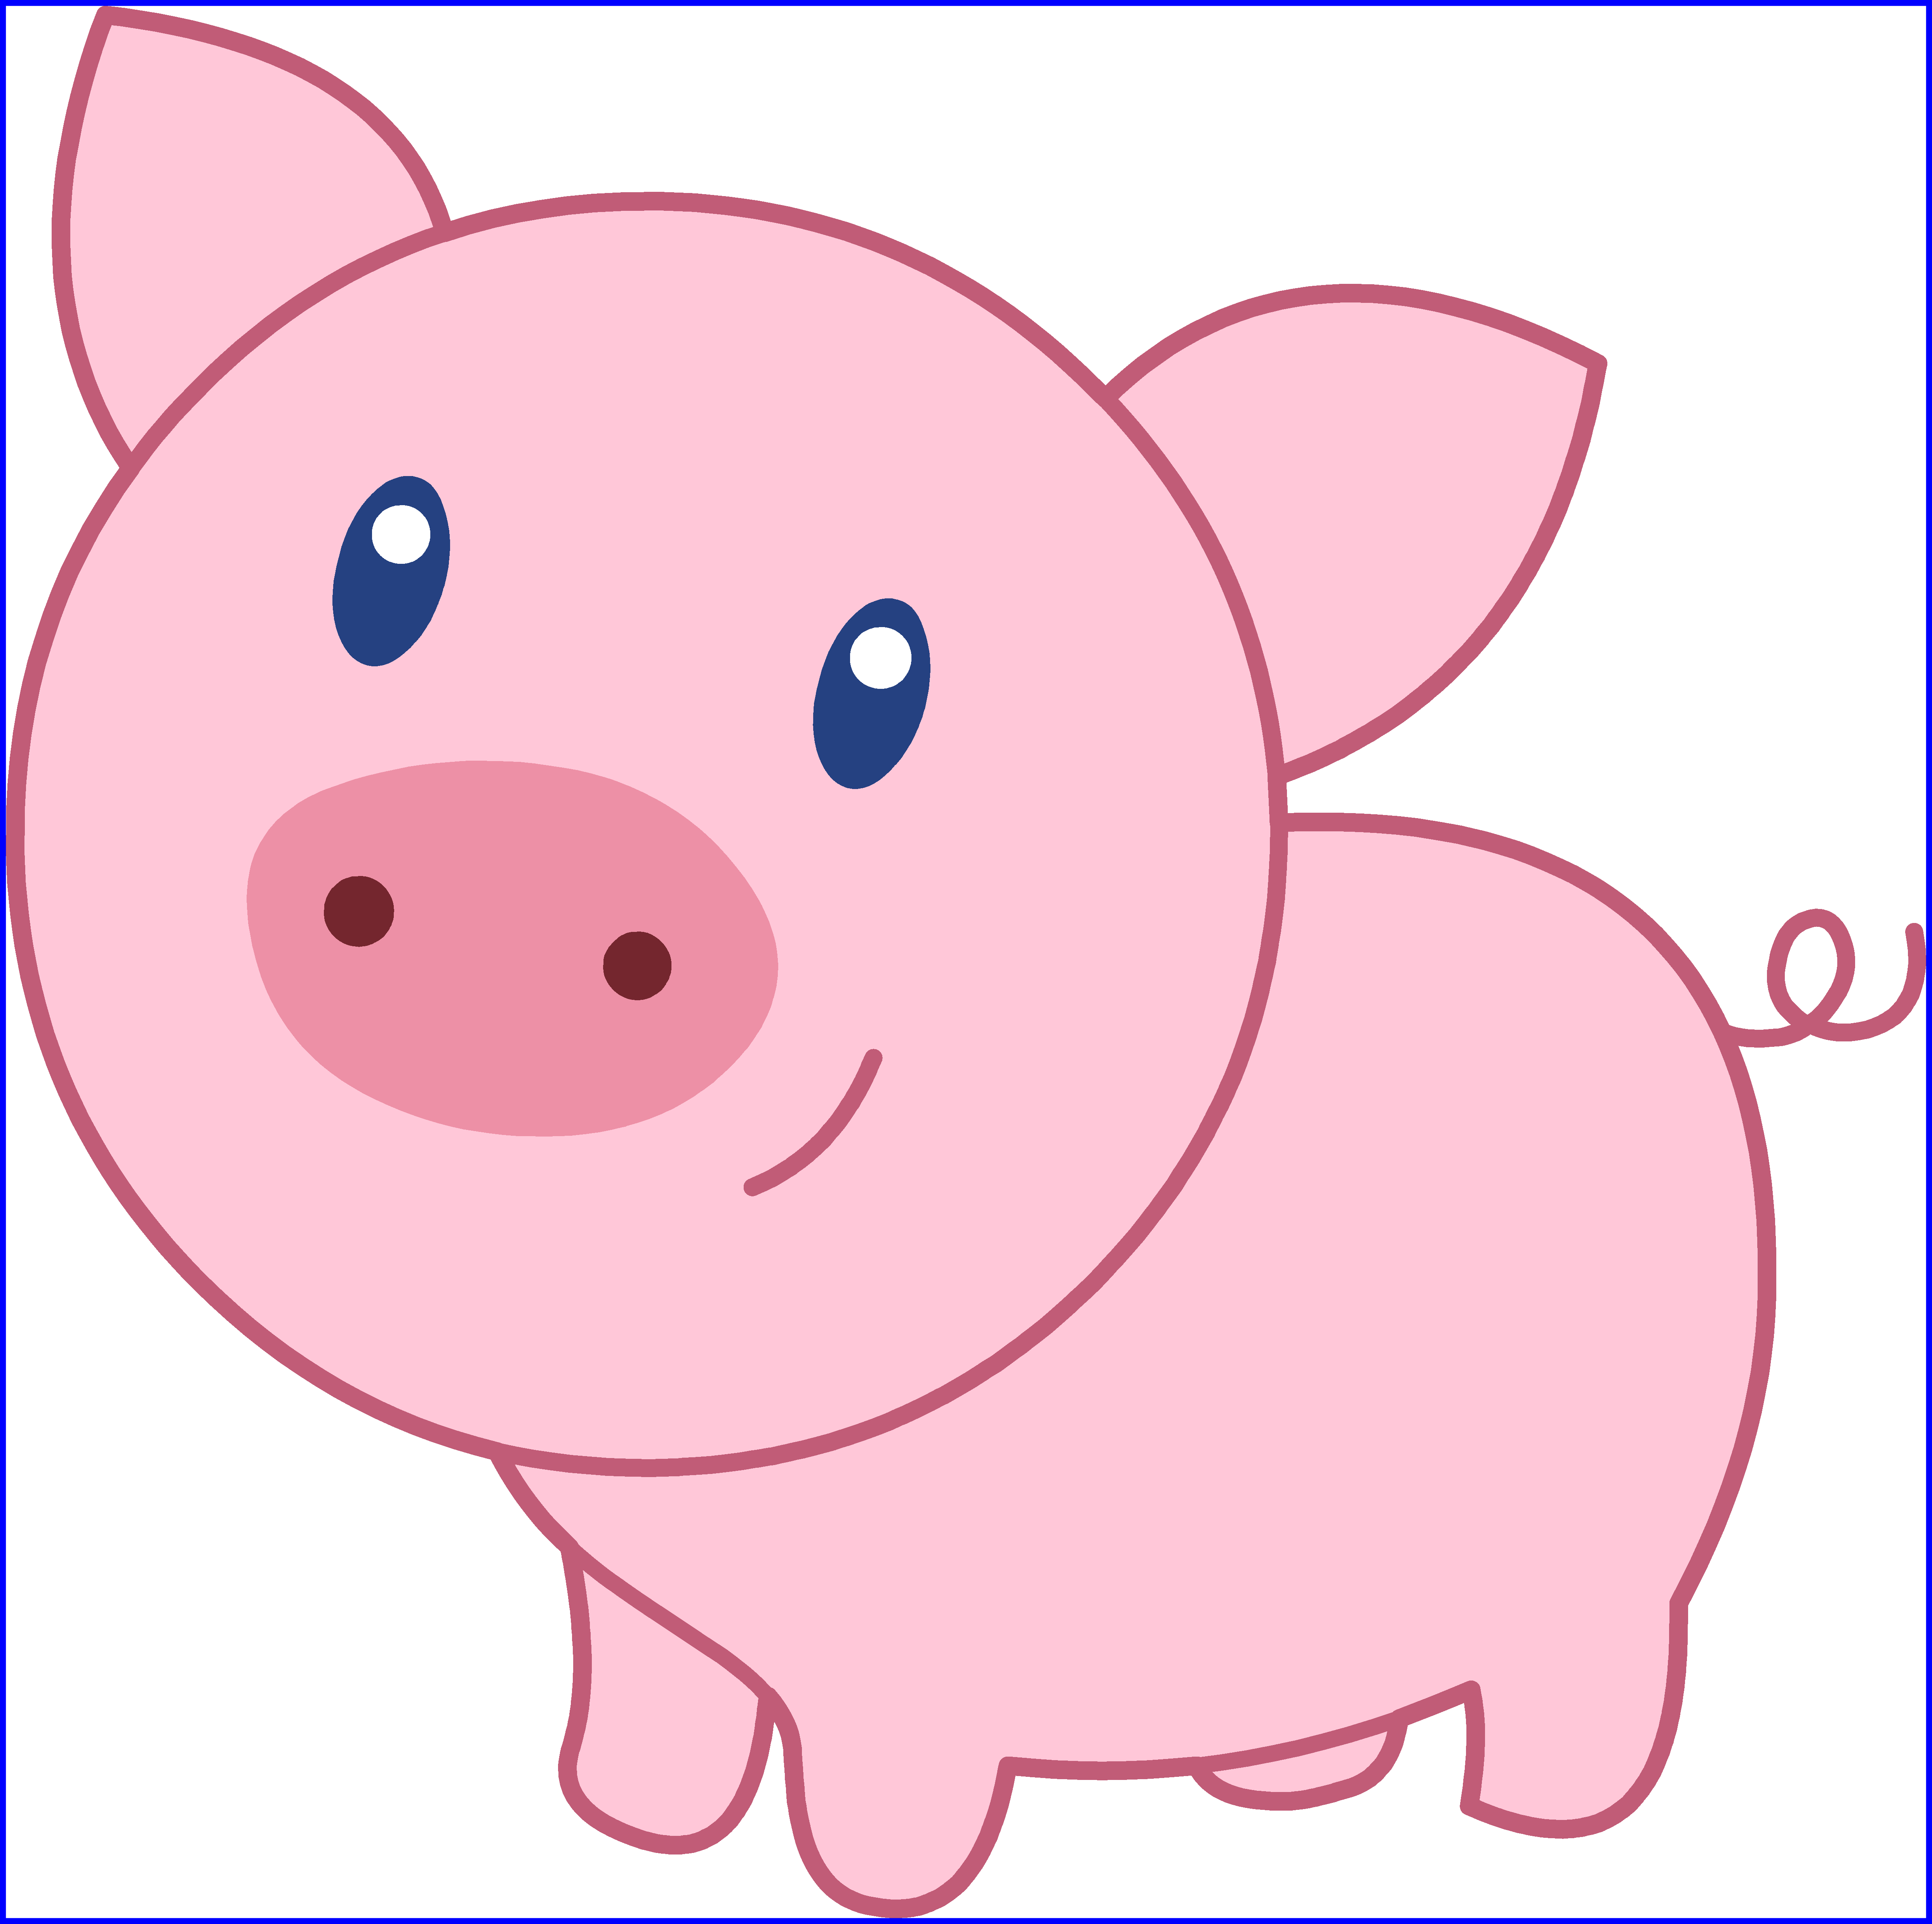 Pig swine